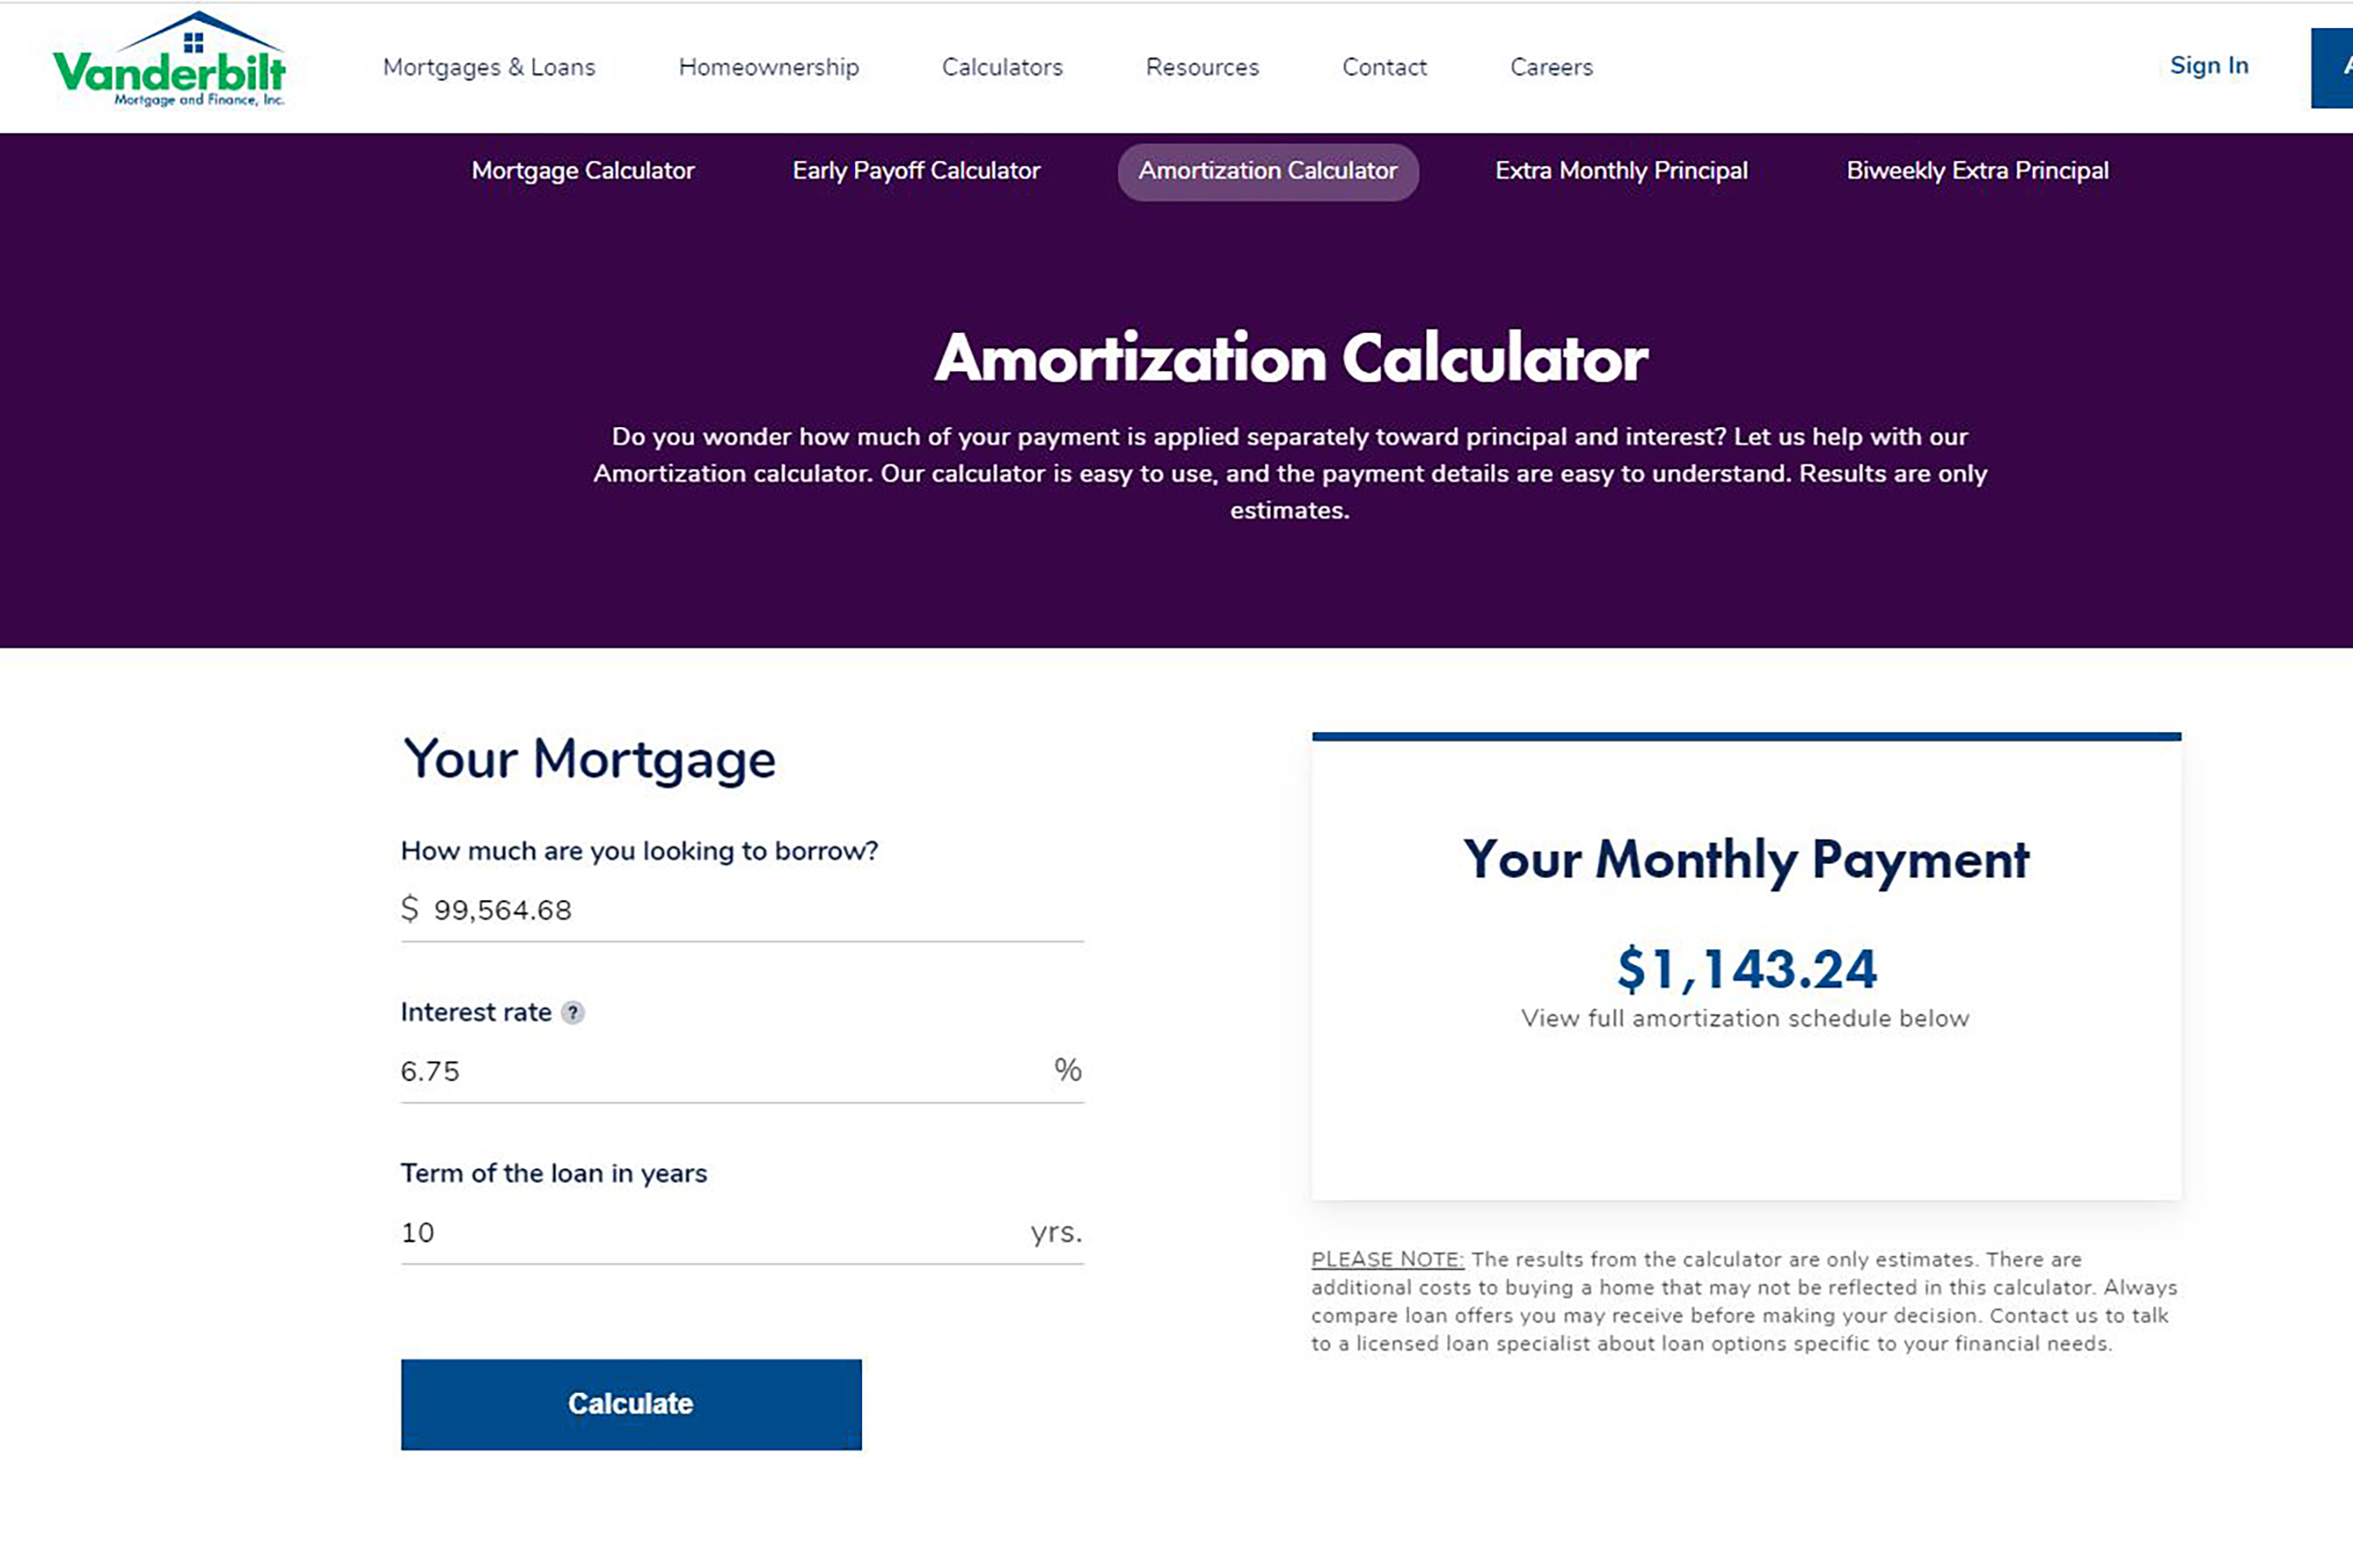 Amortization Calculator webpage